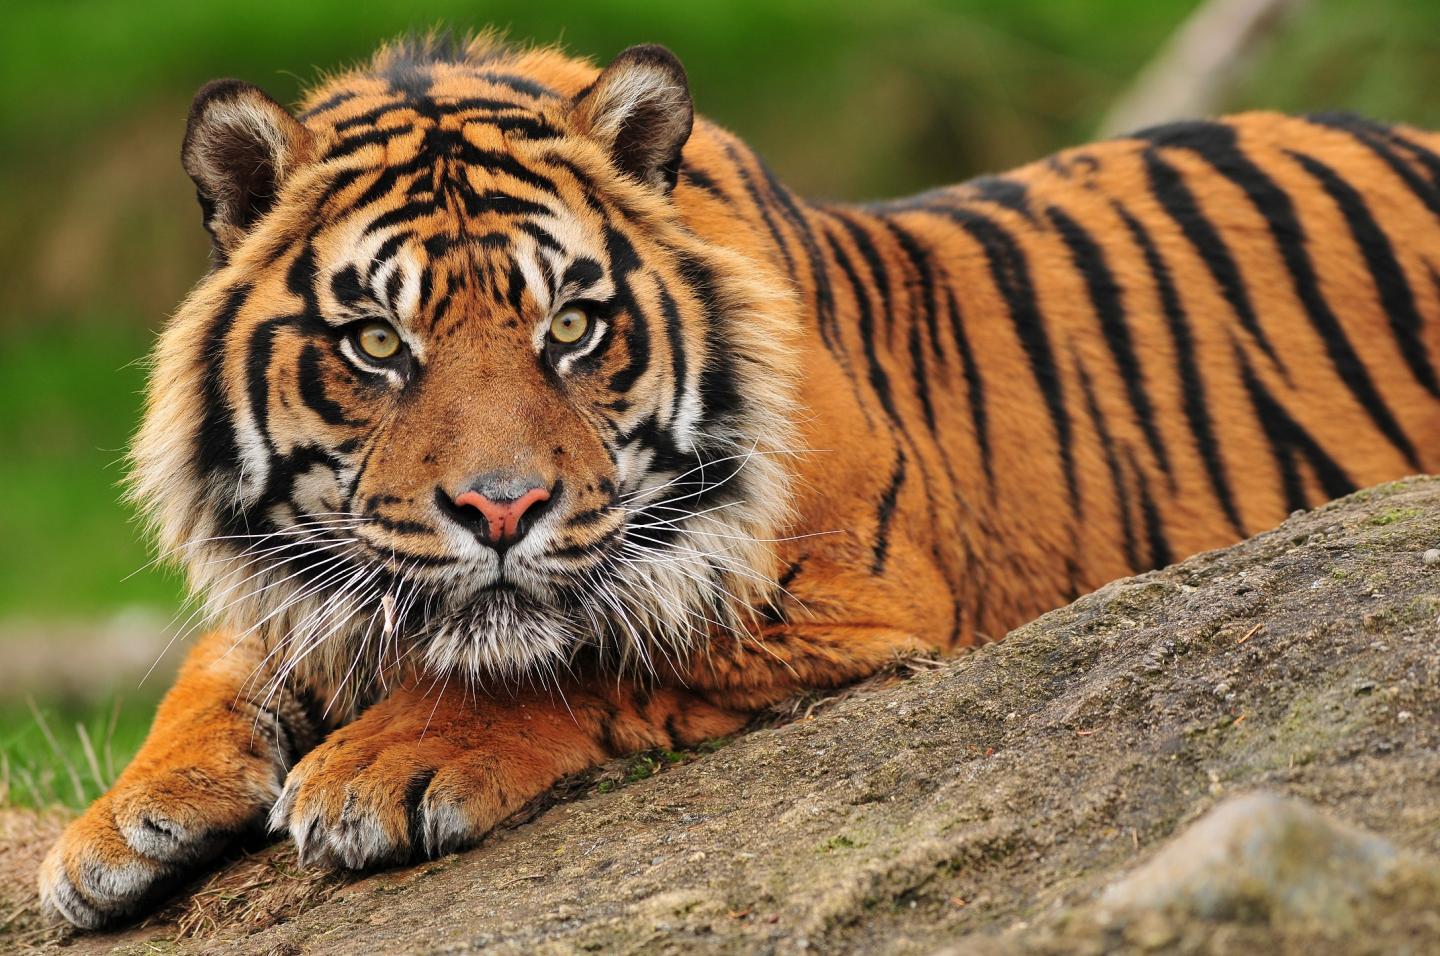 Sumatran tigers were one of the species filmed in the UniSA pilot study. Source: Neelspy